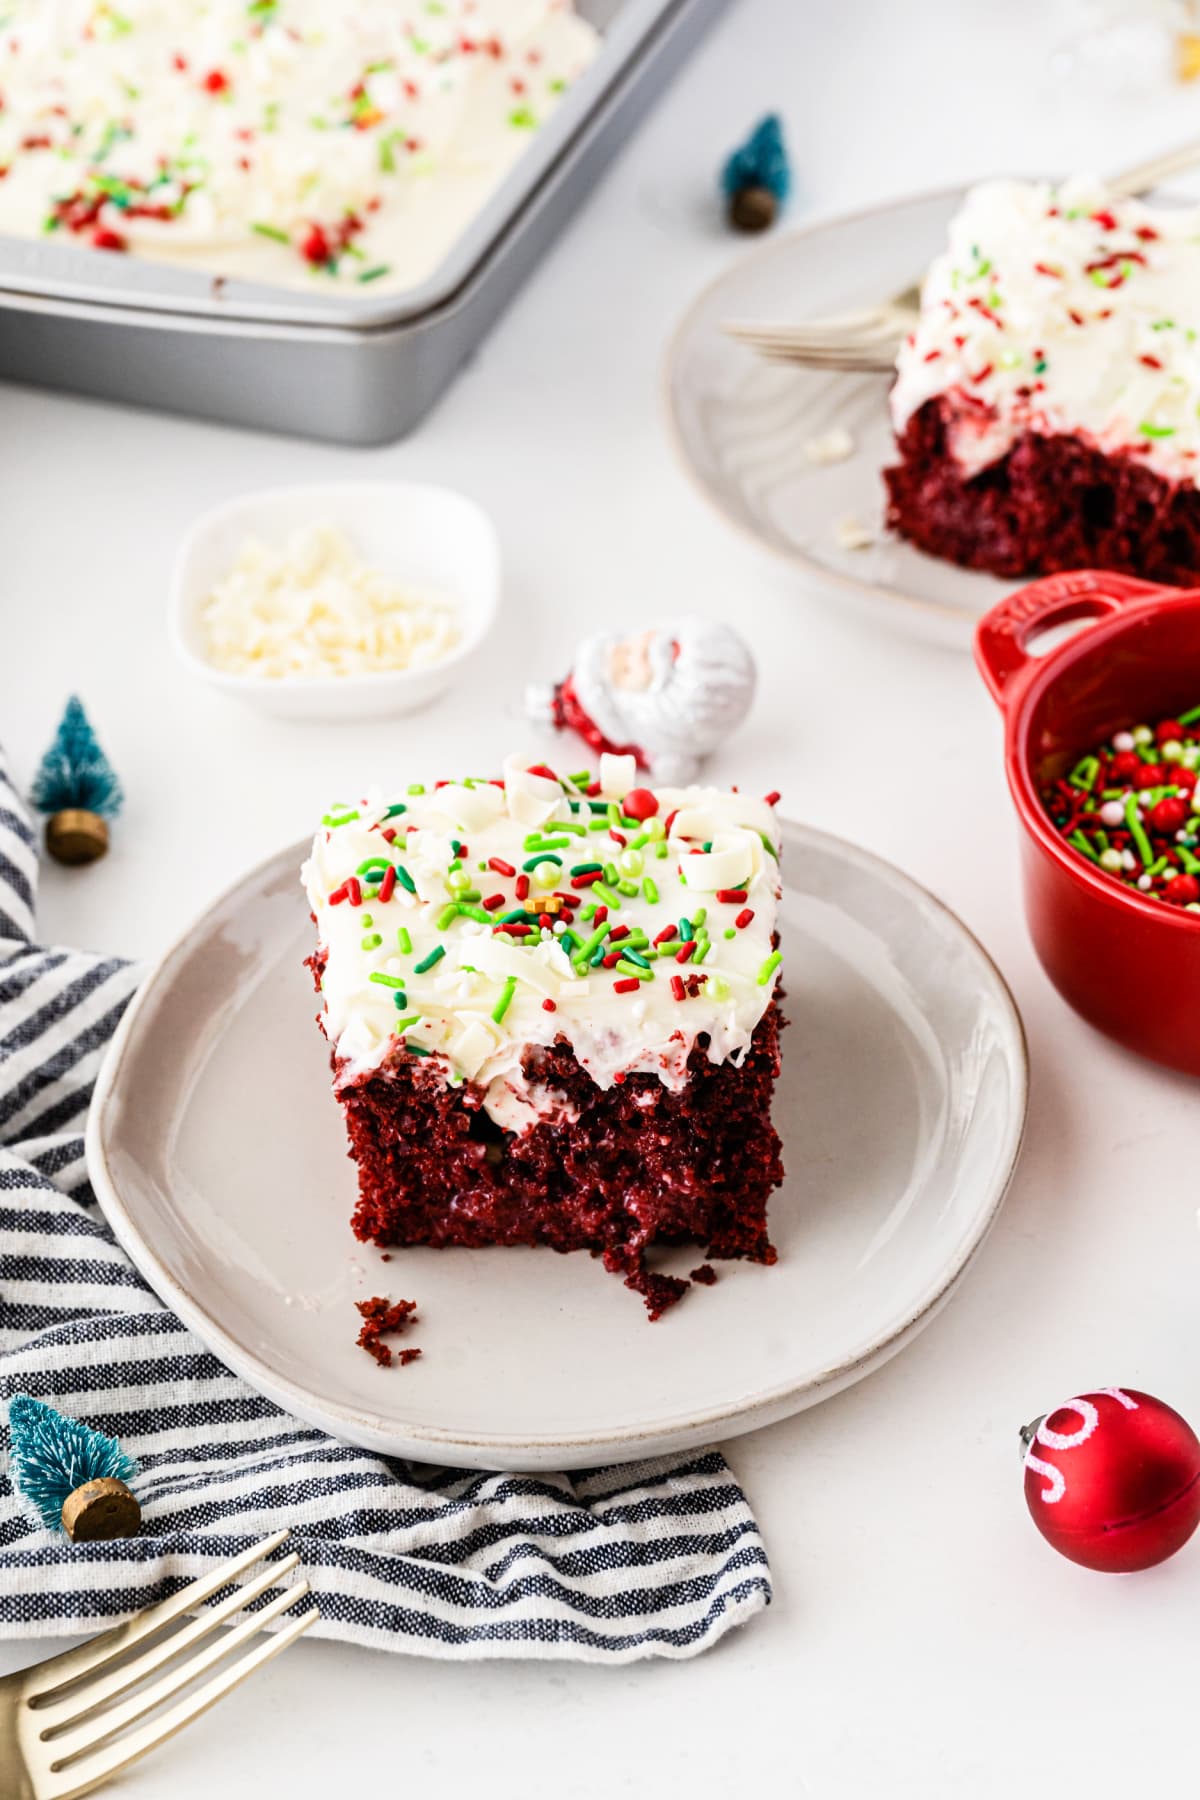 Red velvet cake with Christmas toppings